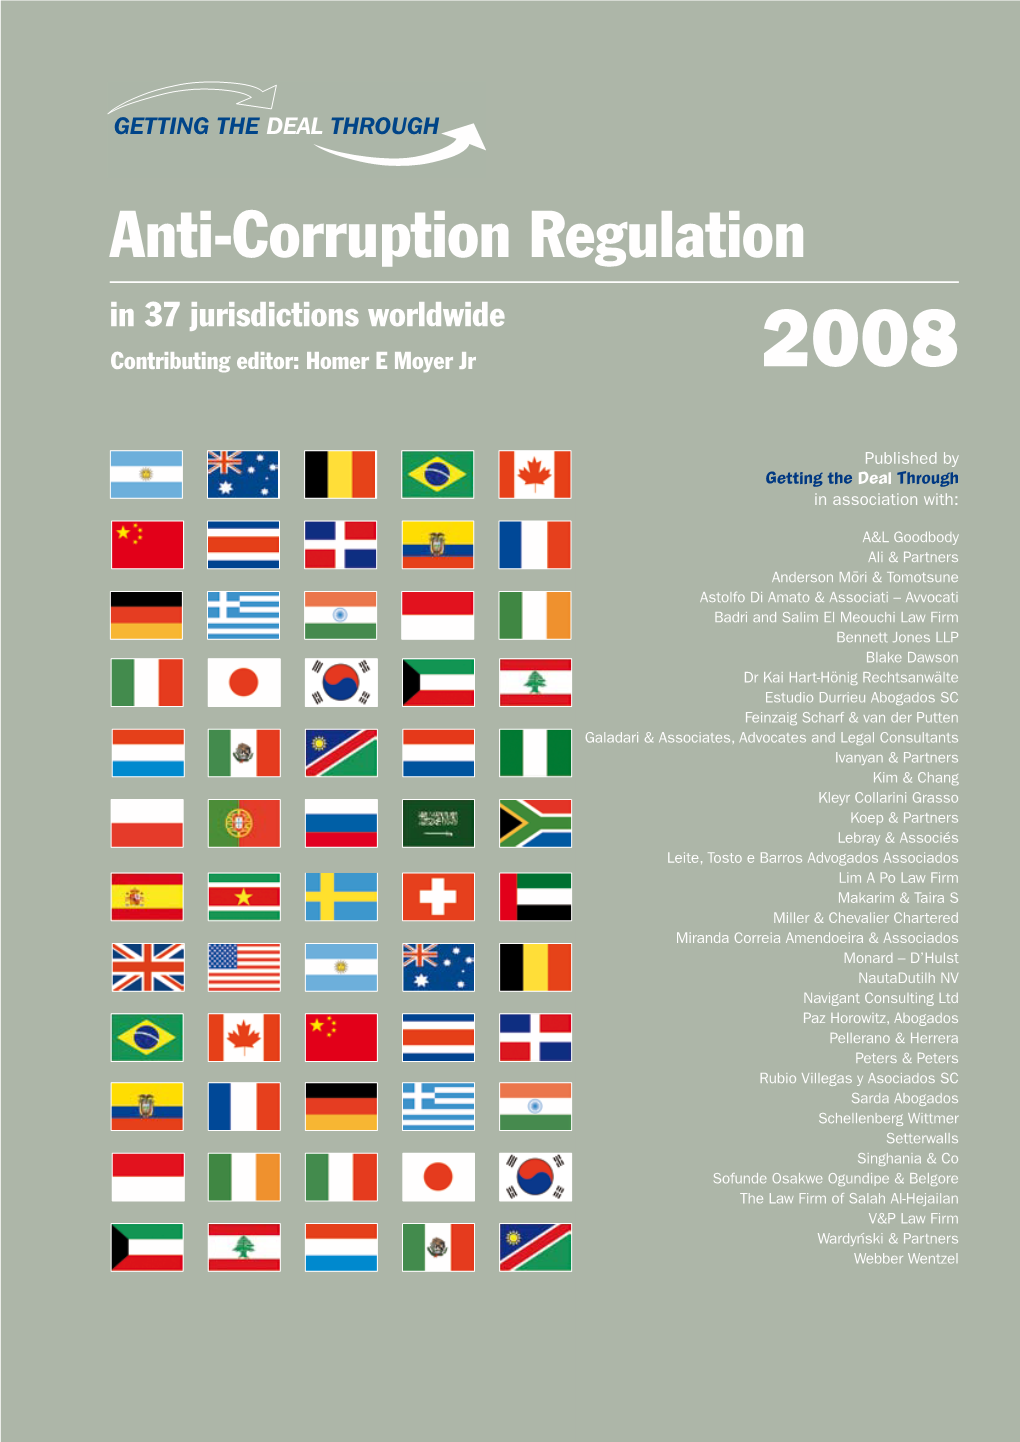 Anti-Corruption Regulation in 37 Jurisdictions Worldwide Contributing Editor: Homer E Moyer Jr 2008